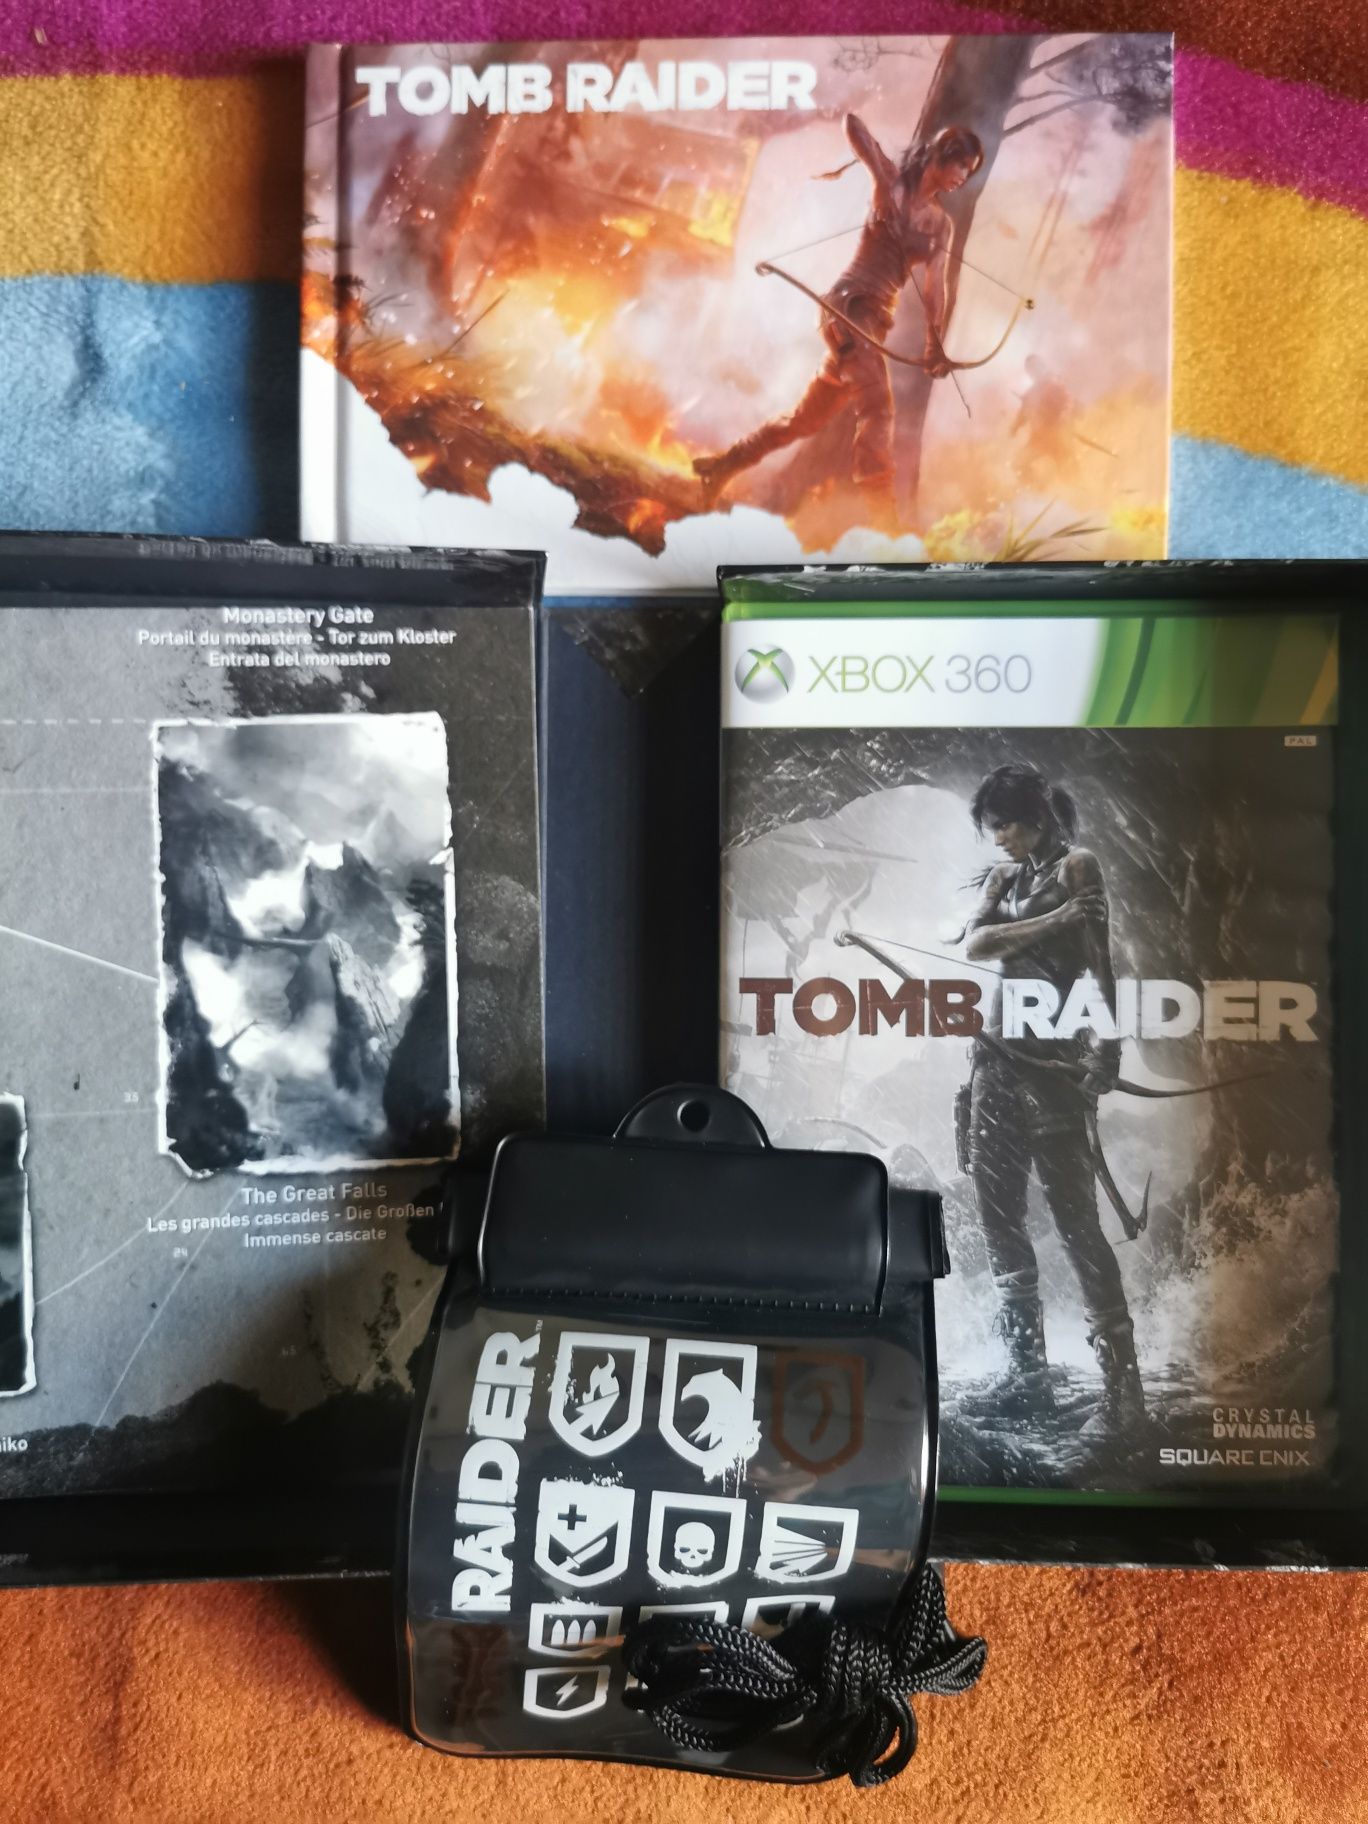 Tomb Raider Survival Edition Xbox 360 Microsoft